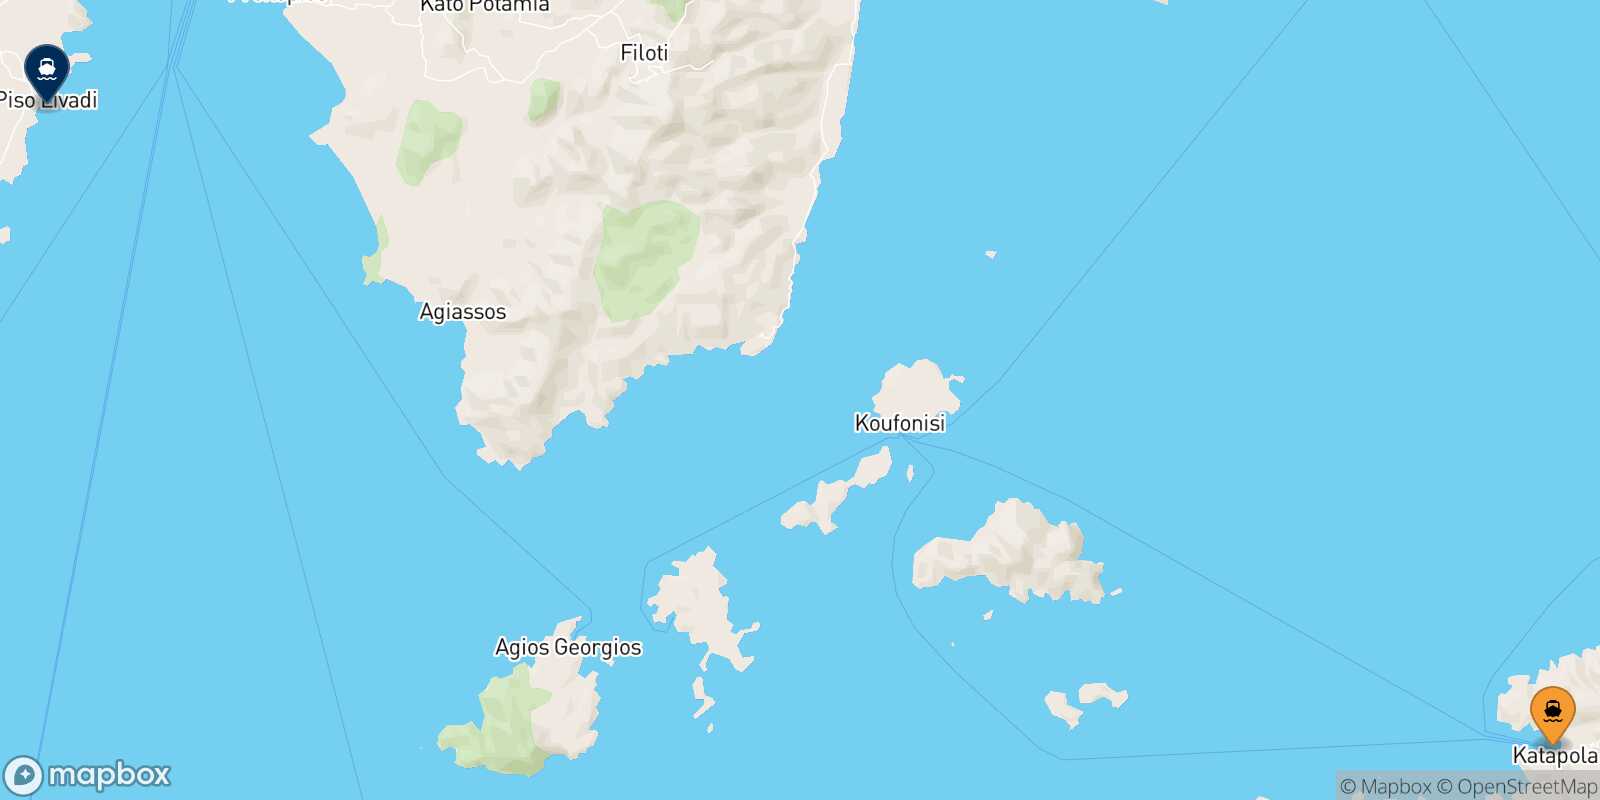 Mappa della rotta Katapola (Amorgos) Piso Livadi (Paros)